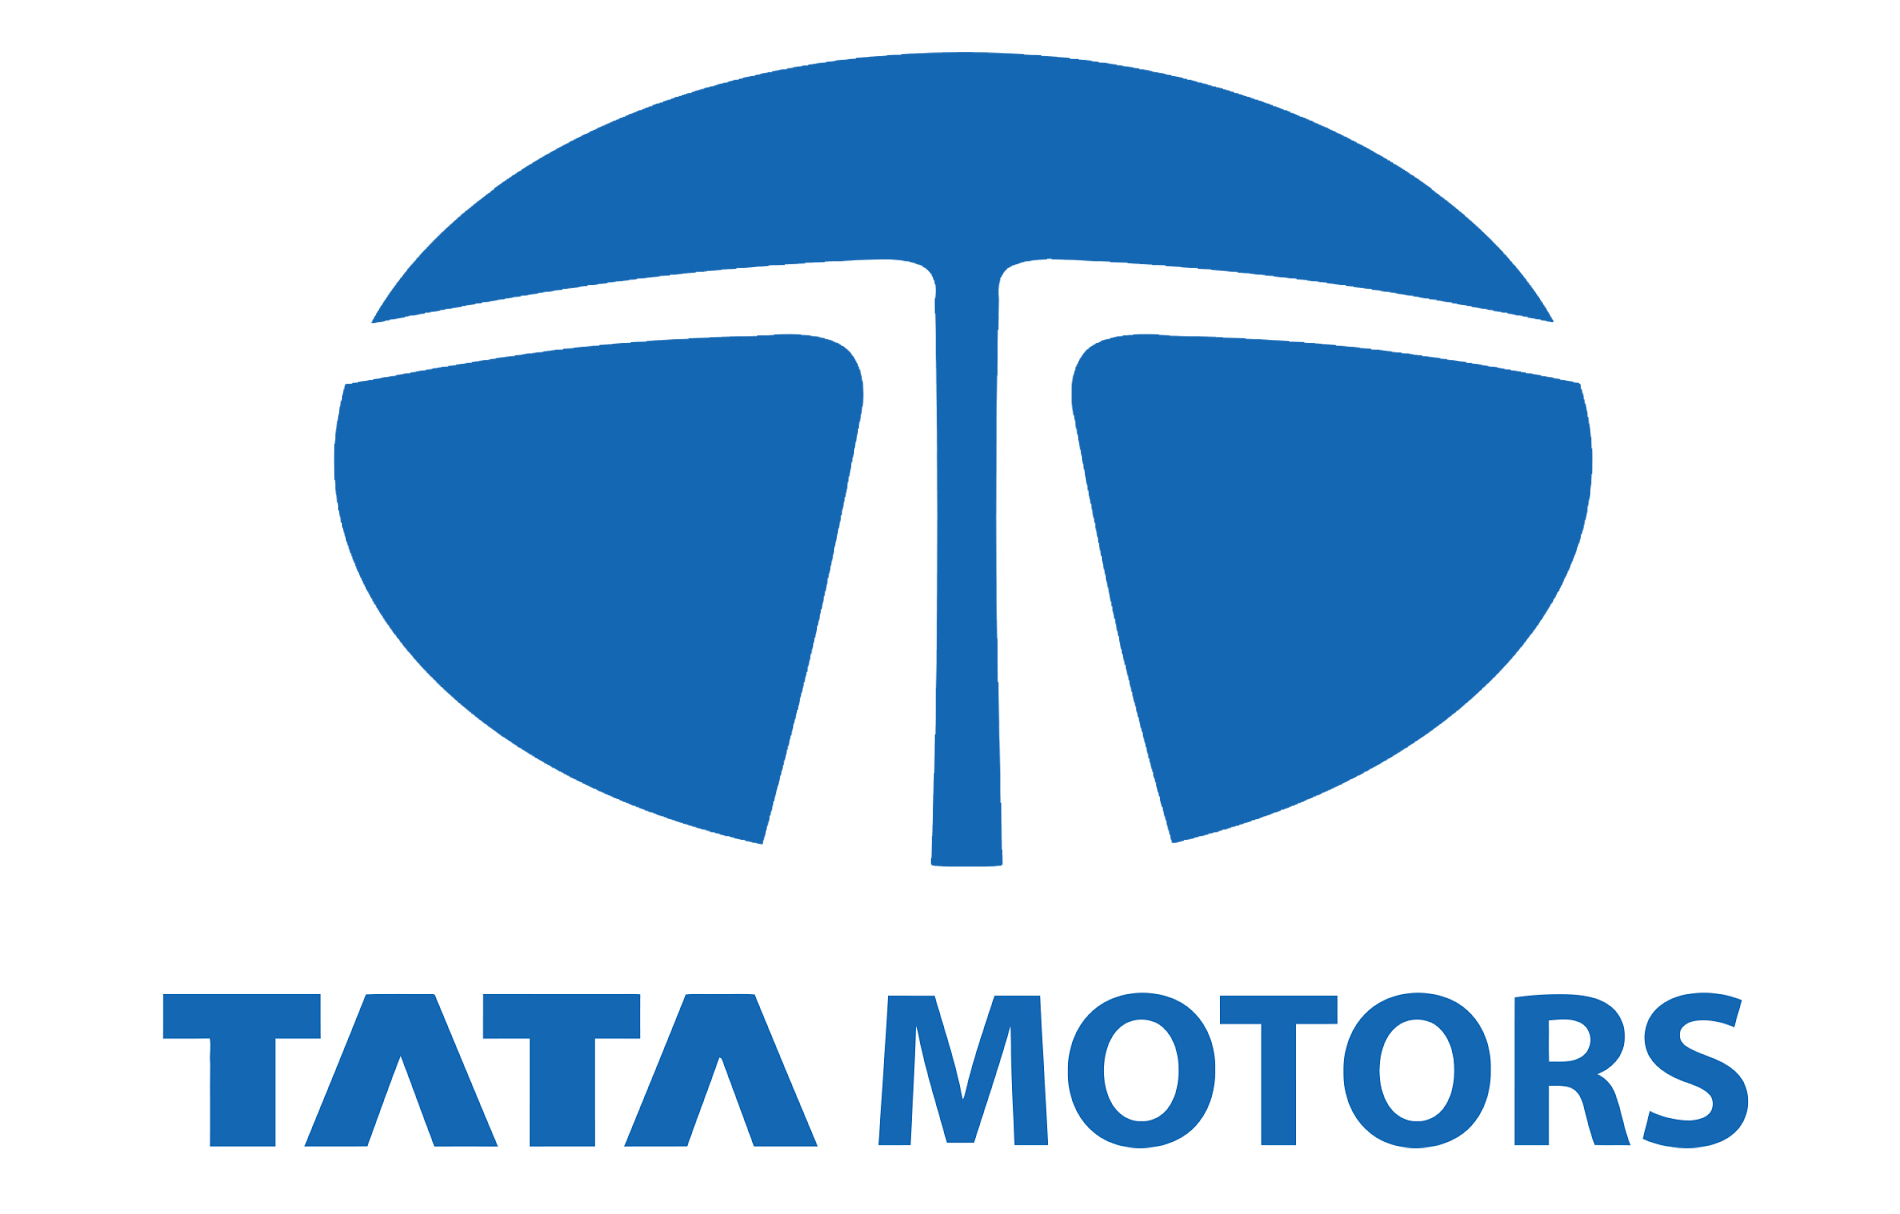 Tata Motors Cars Showroom - Shreeji Automart Pvt Ltd|Show Room|Automotive